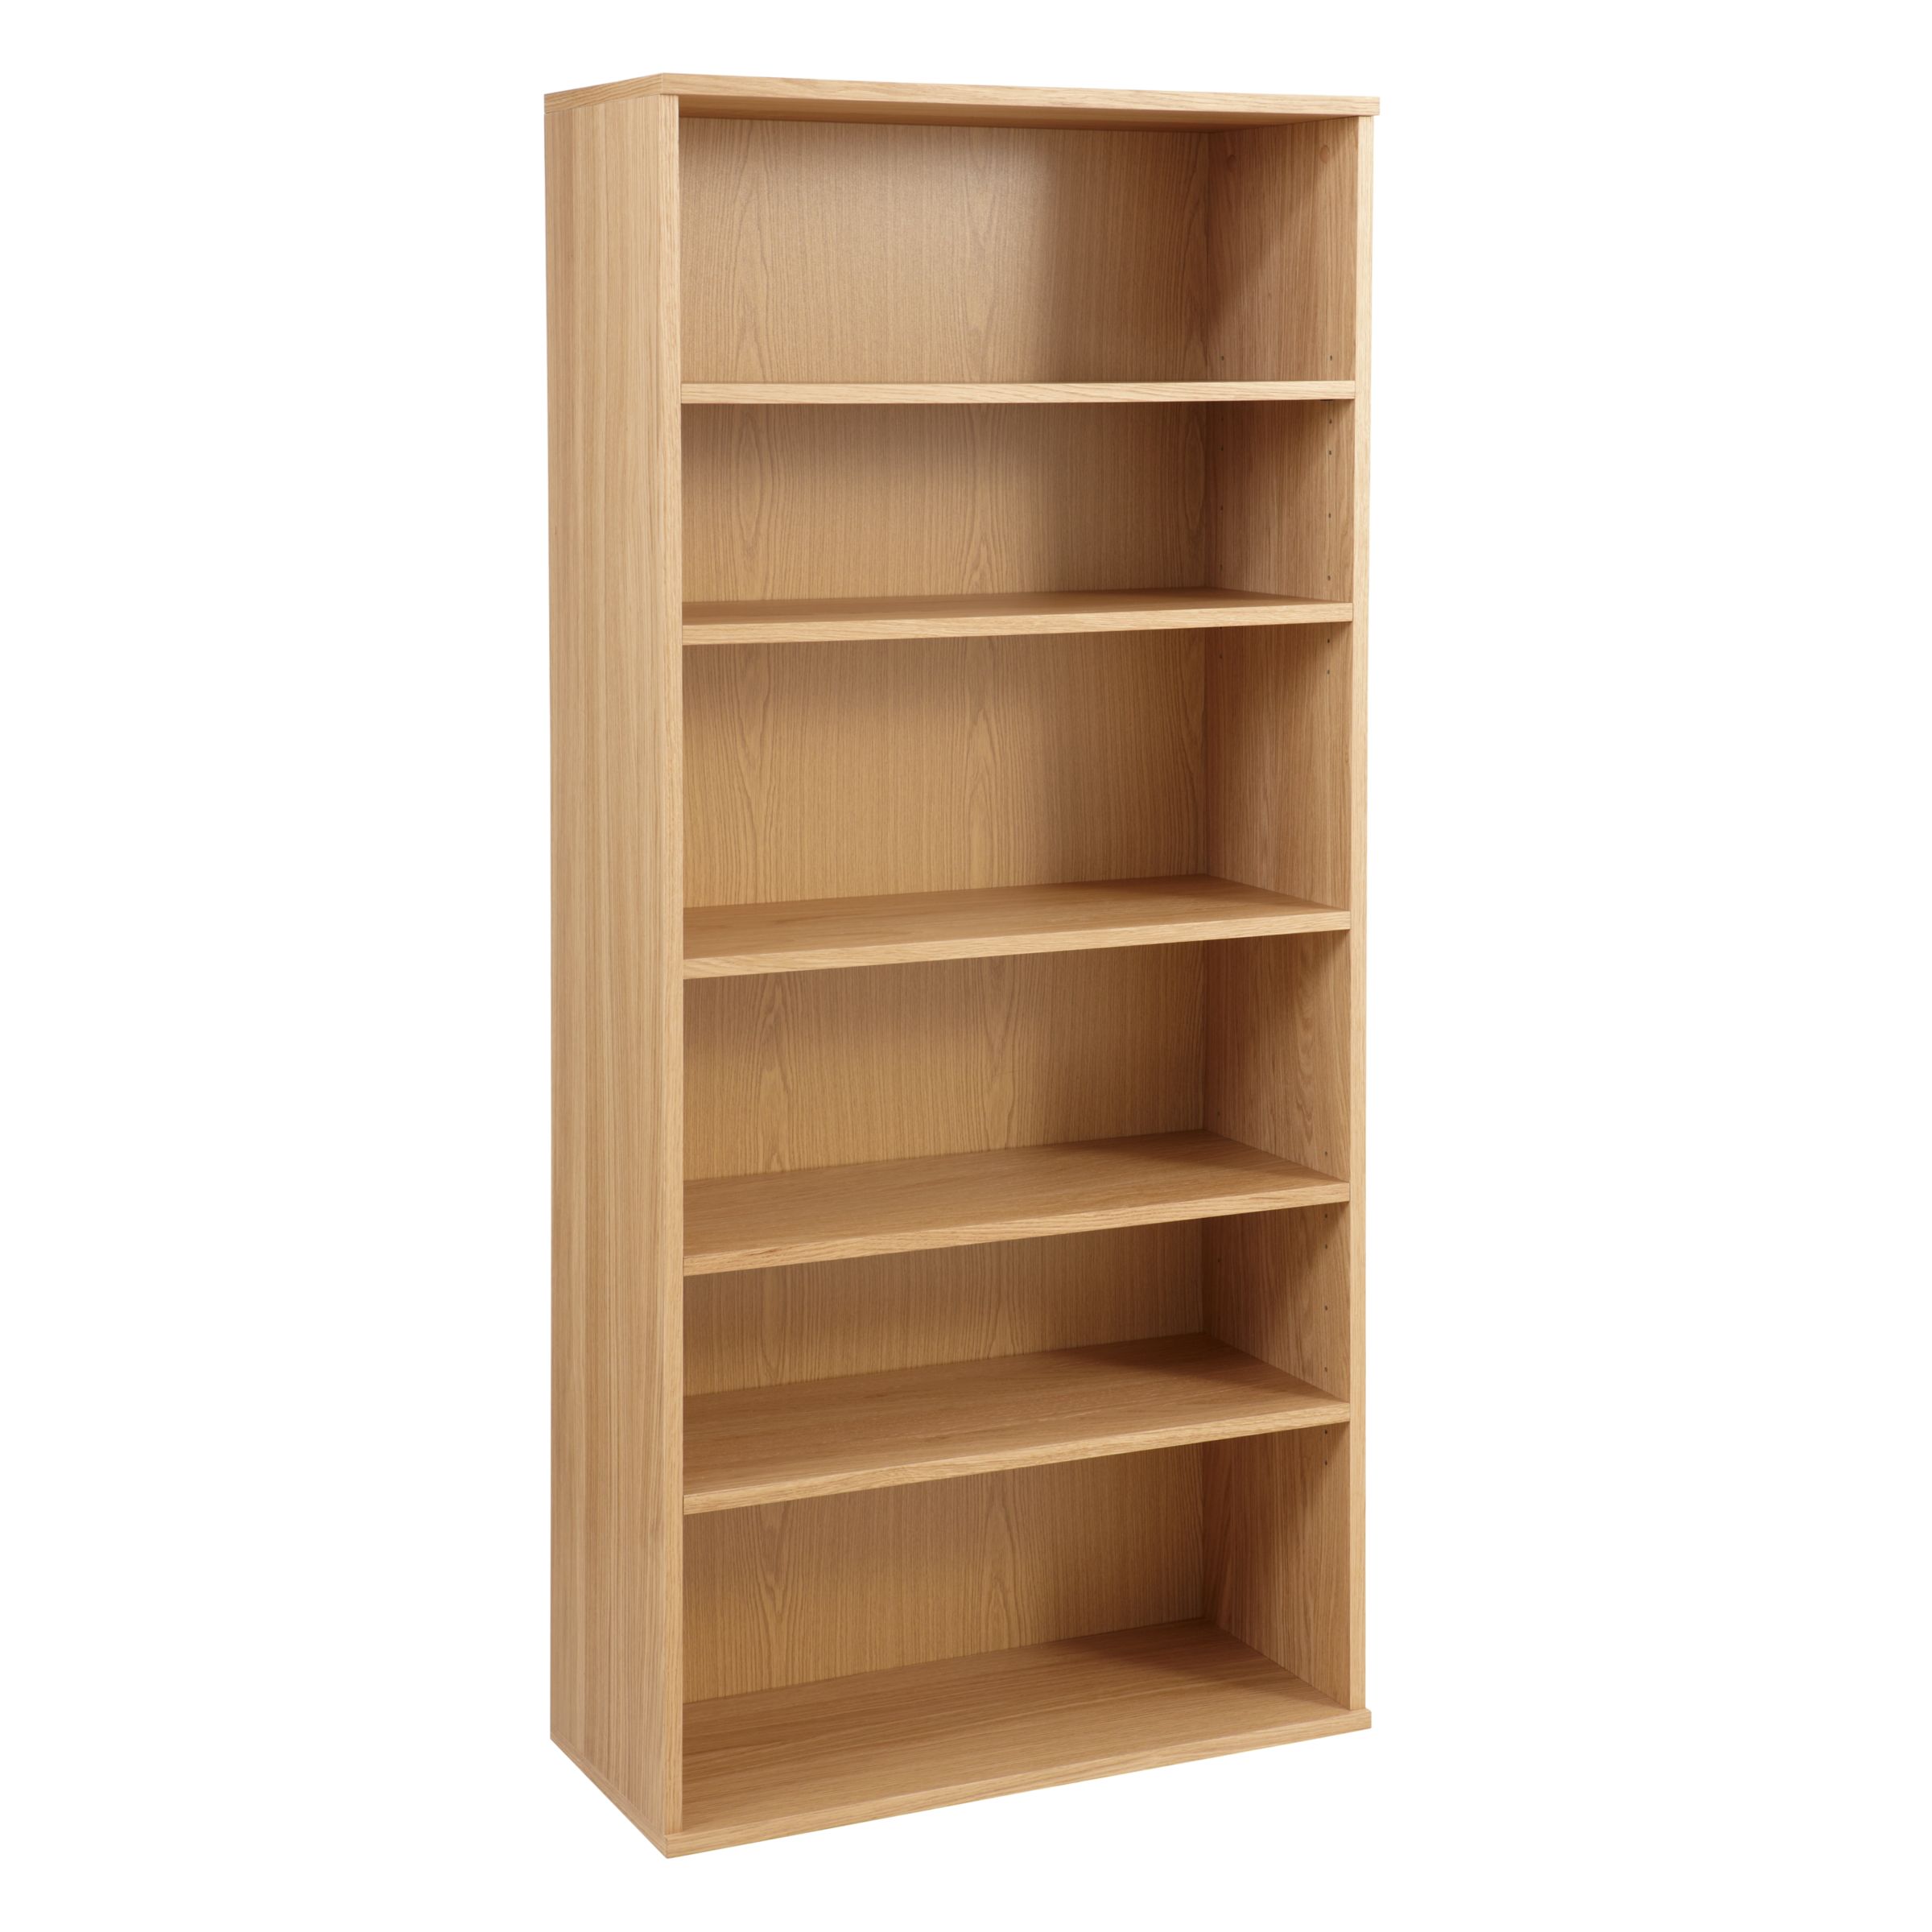 John Lewis Abacus 5 Shelf Bookcase, FSC-Certified